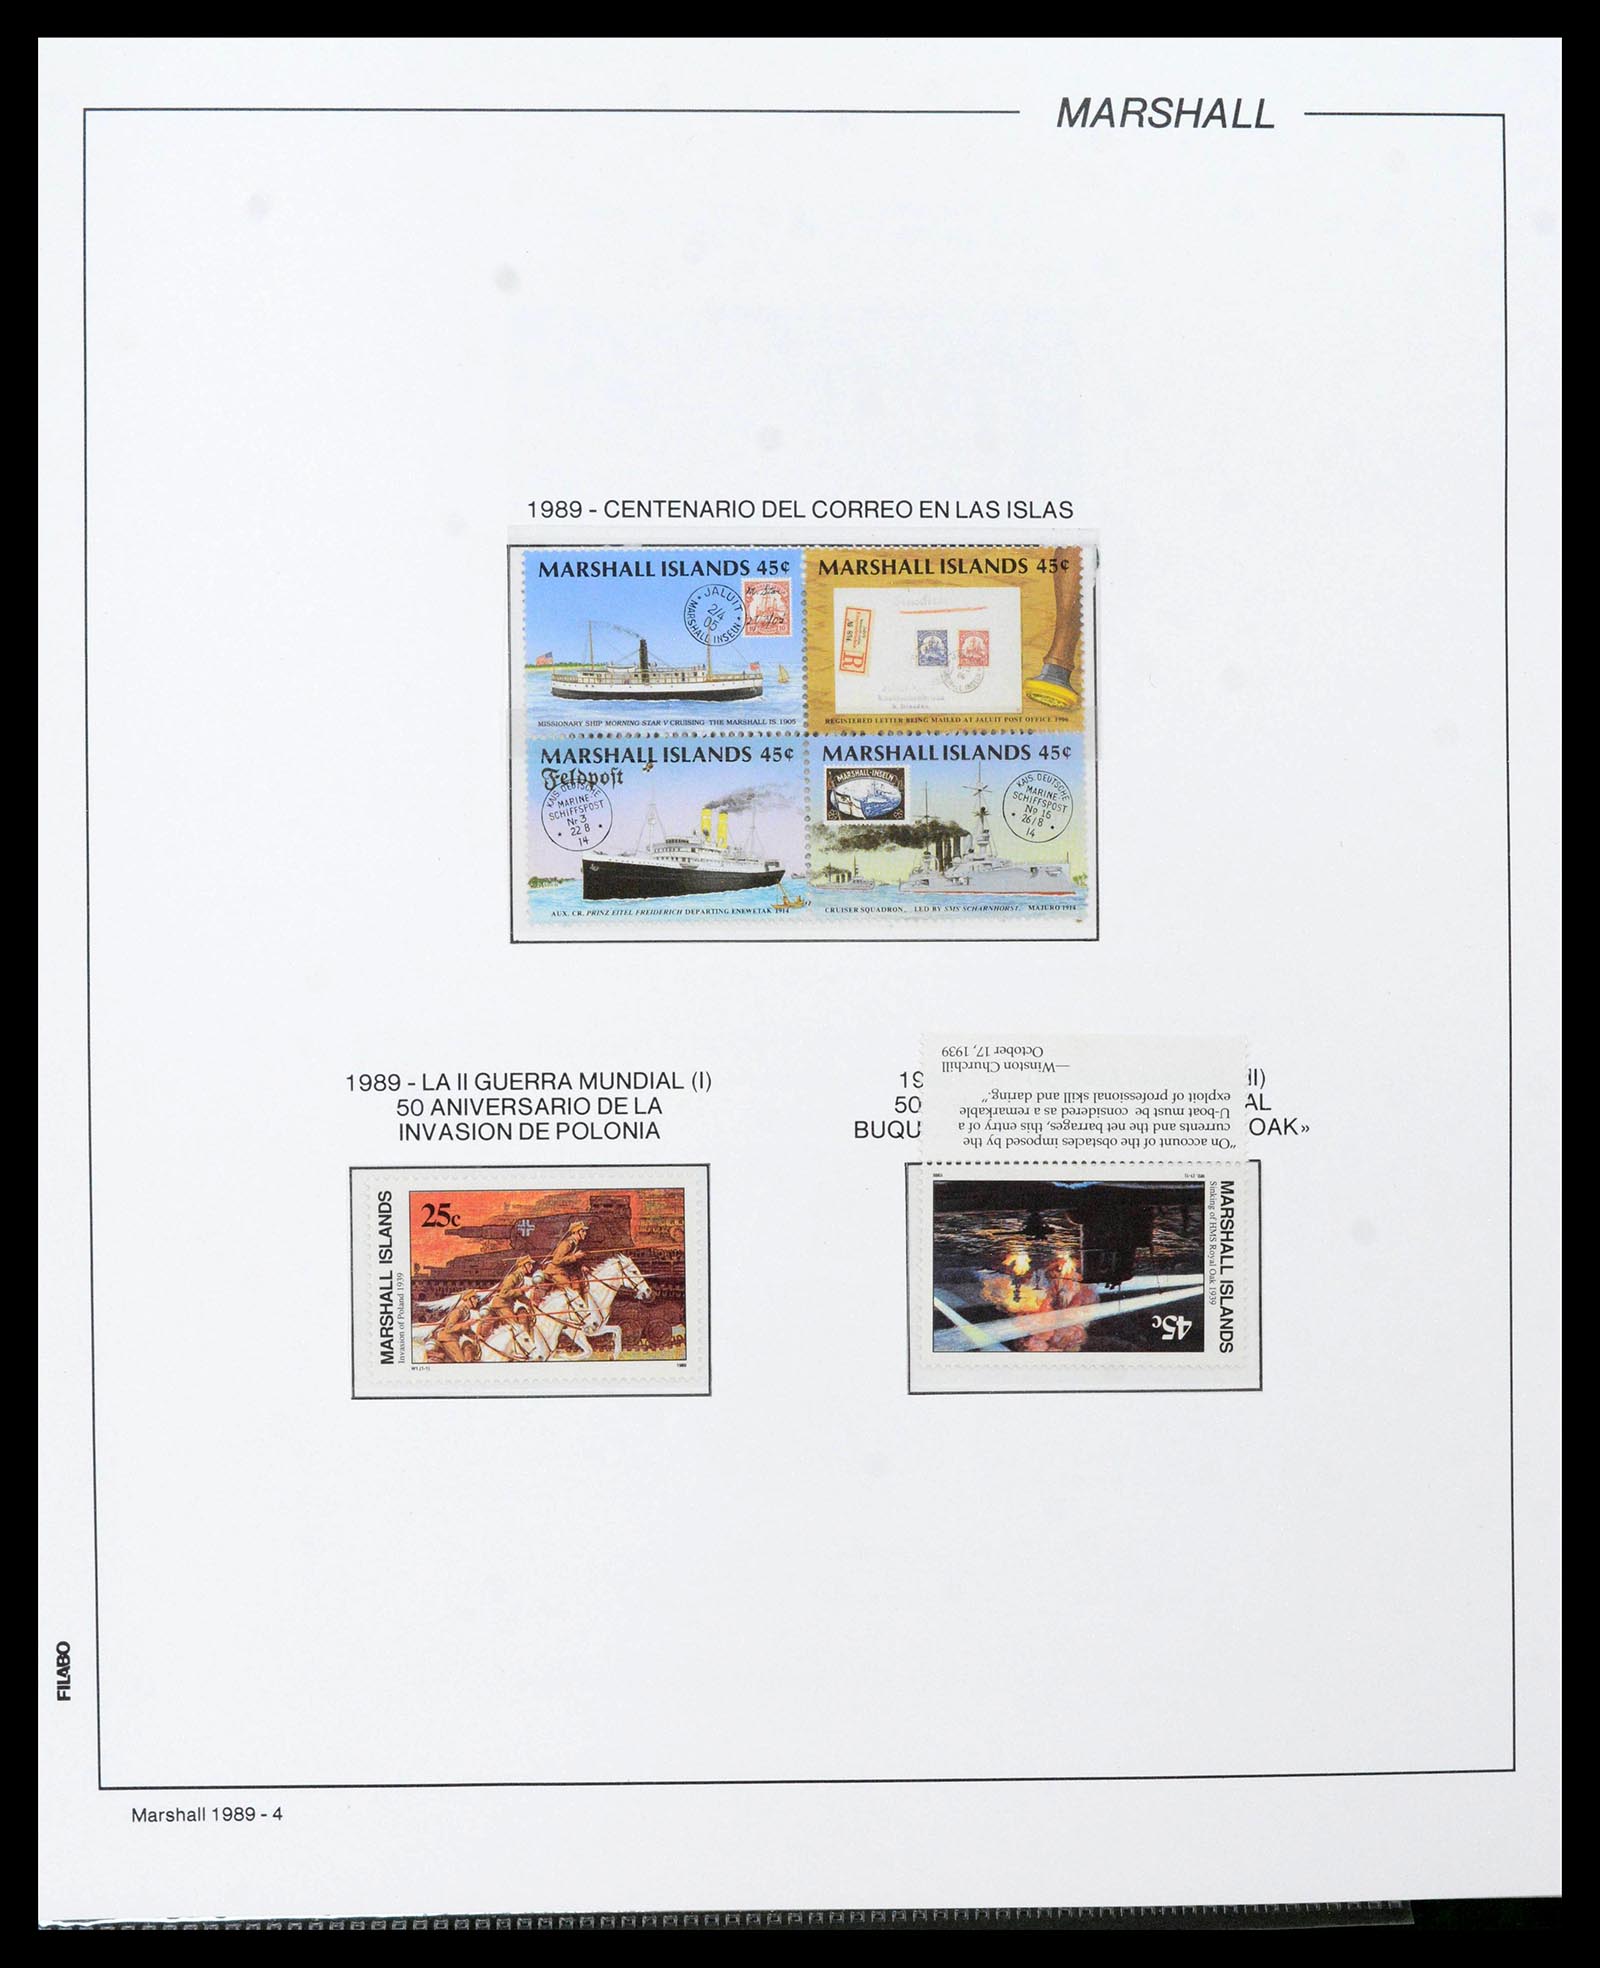 39222 0138 - Stamp collection 39222 Palau, Micronesia and Marshall islands 1980-1995.